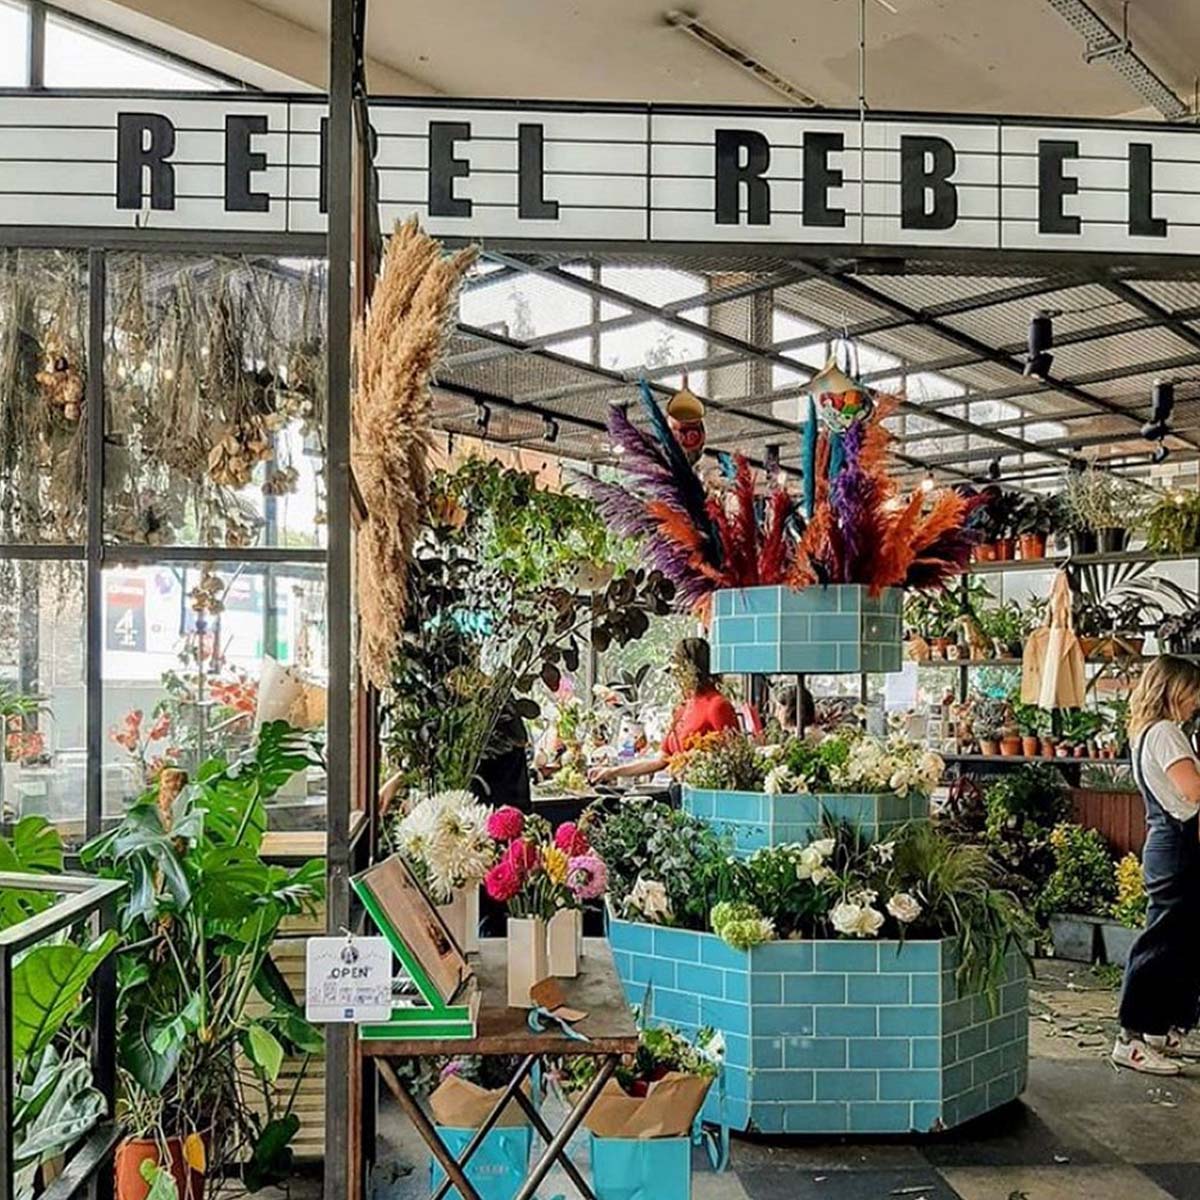 rebel_rebel_florist_featured_on_thursd